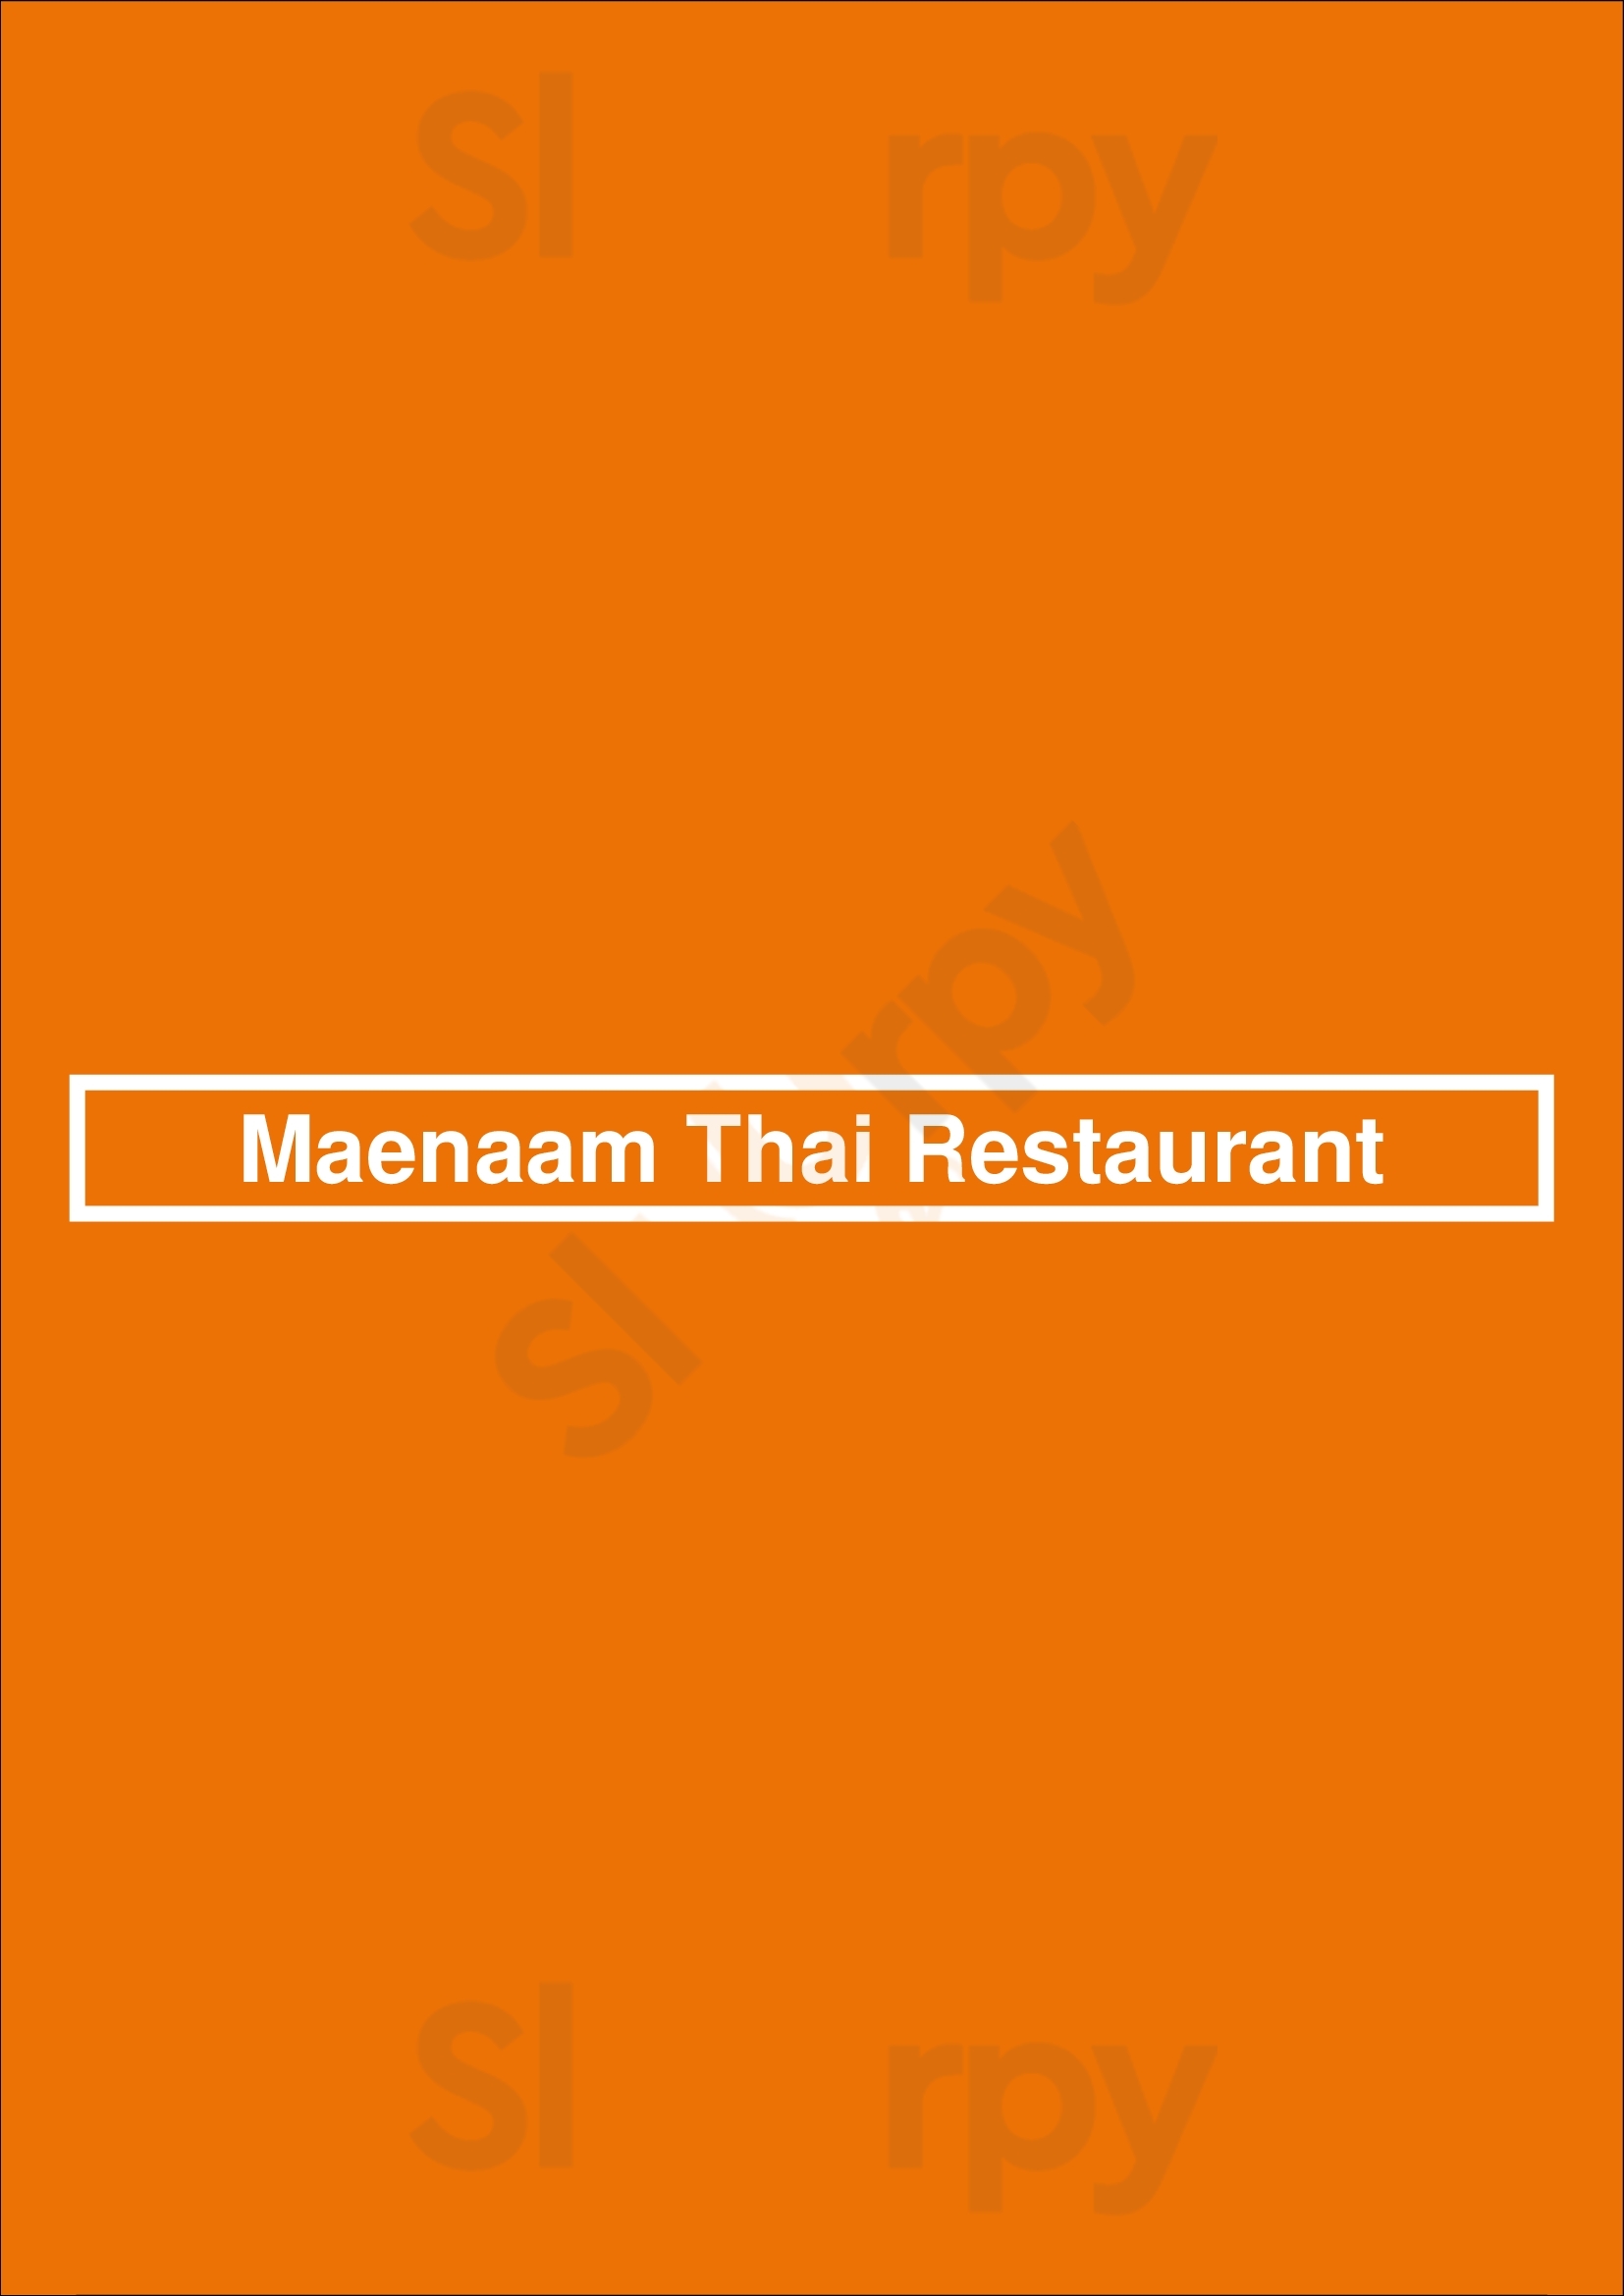 Maenaam Thai Restaurant Amsterdam Menu - 1